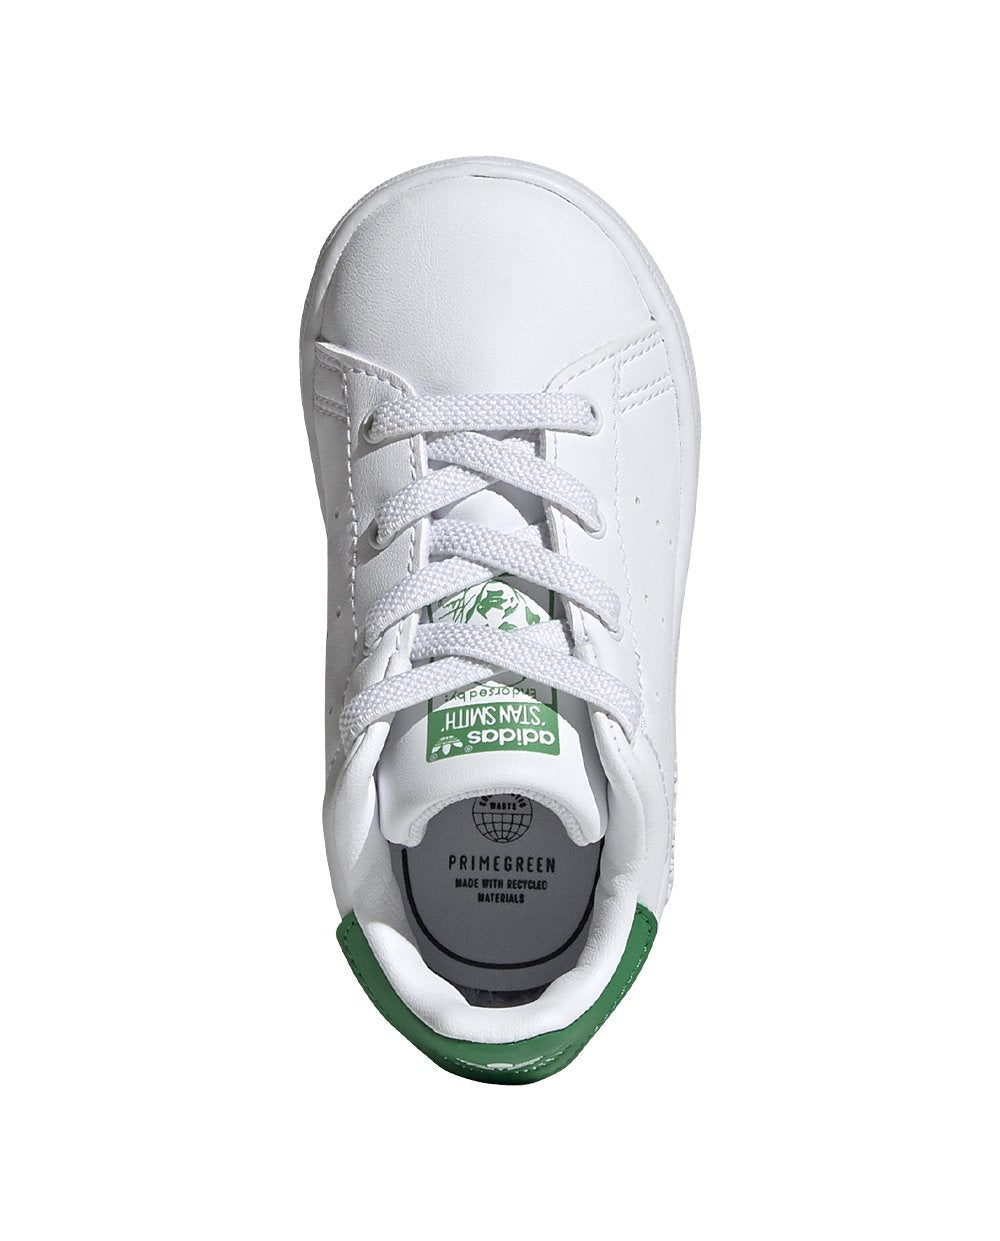 Adidas Stan Smith White and Green